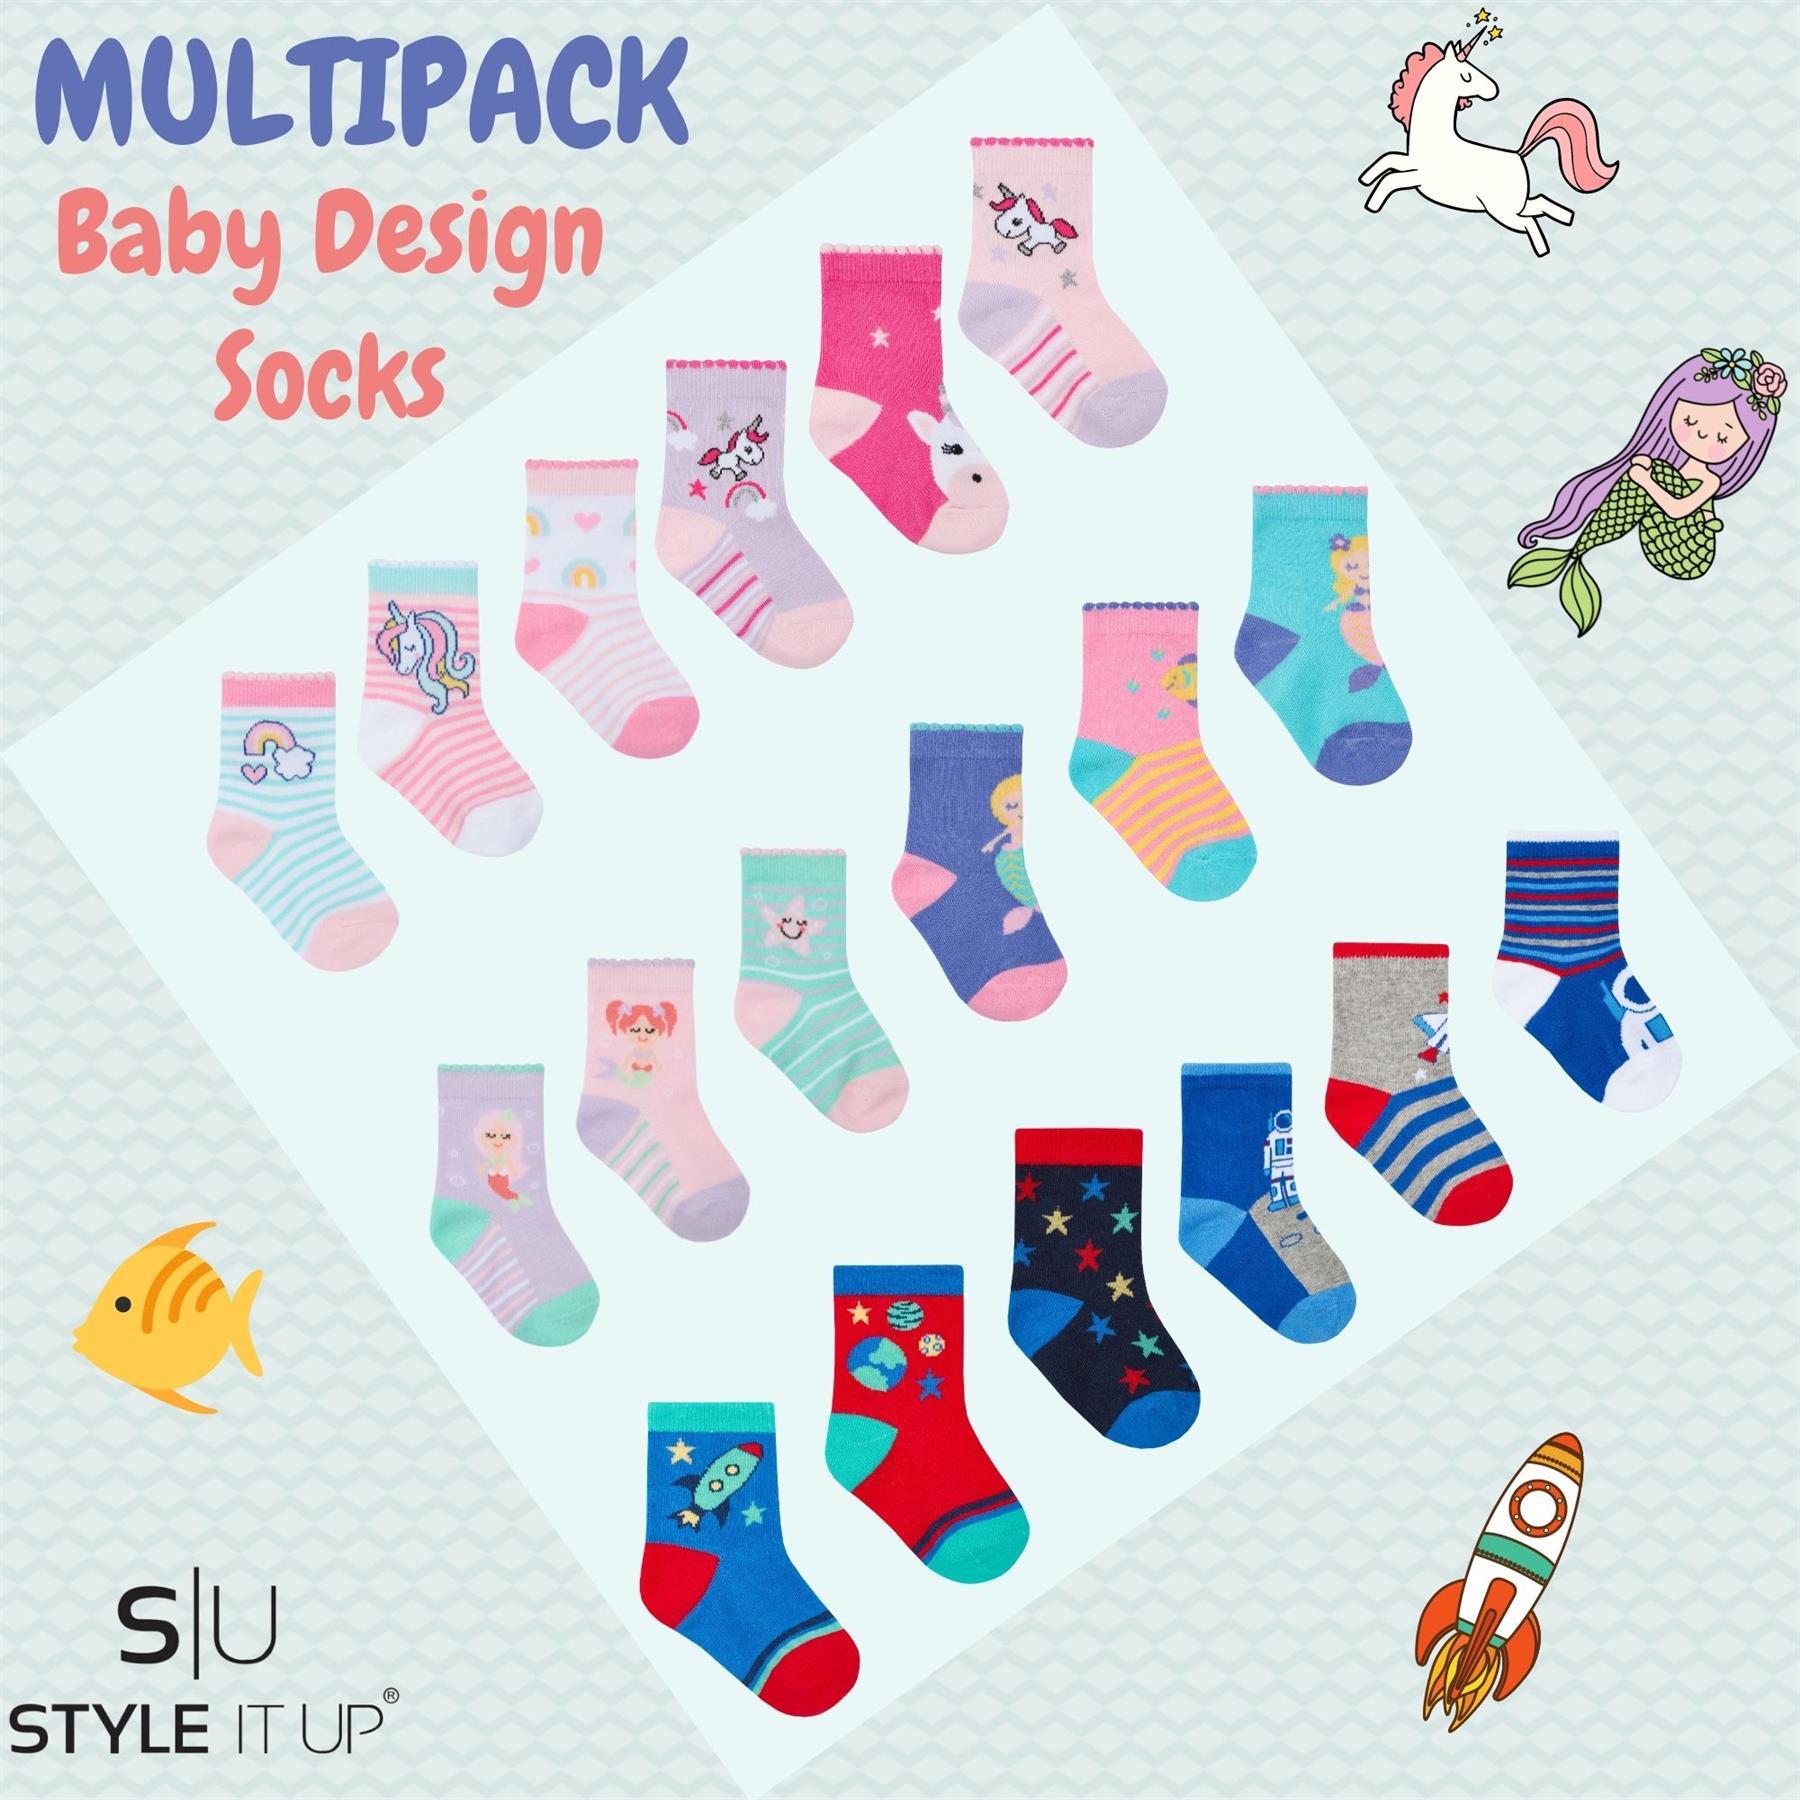 5 Pairs Cotton Design Socks